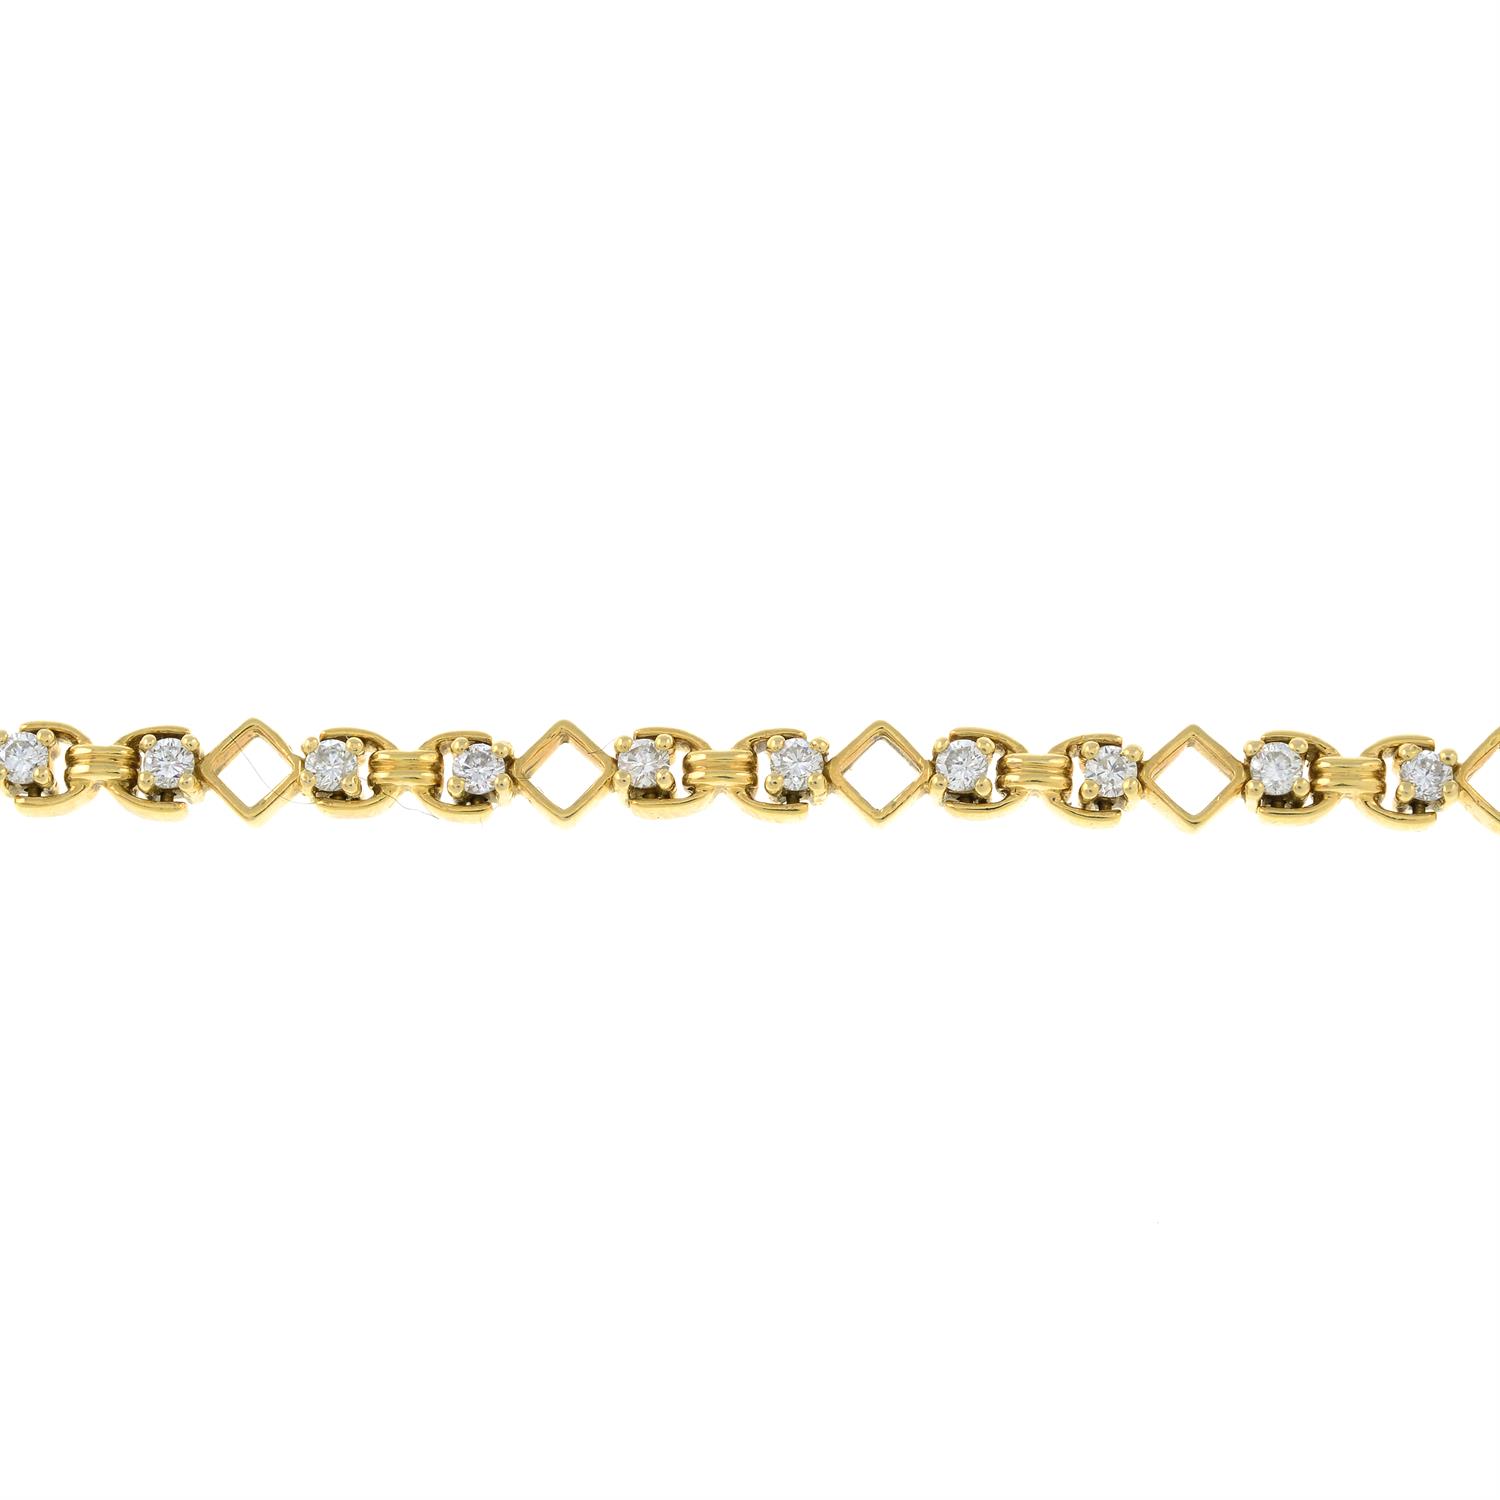 A diamond line bracelet with square-shape link spacers.